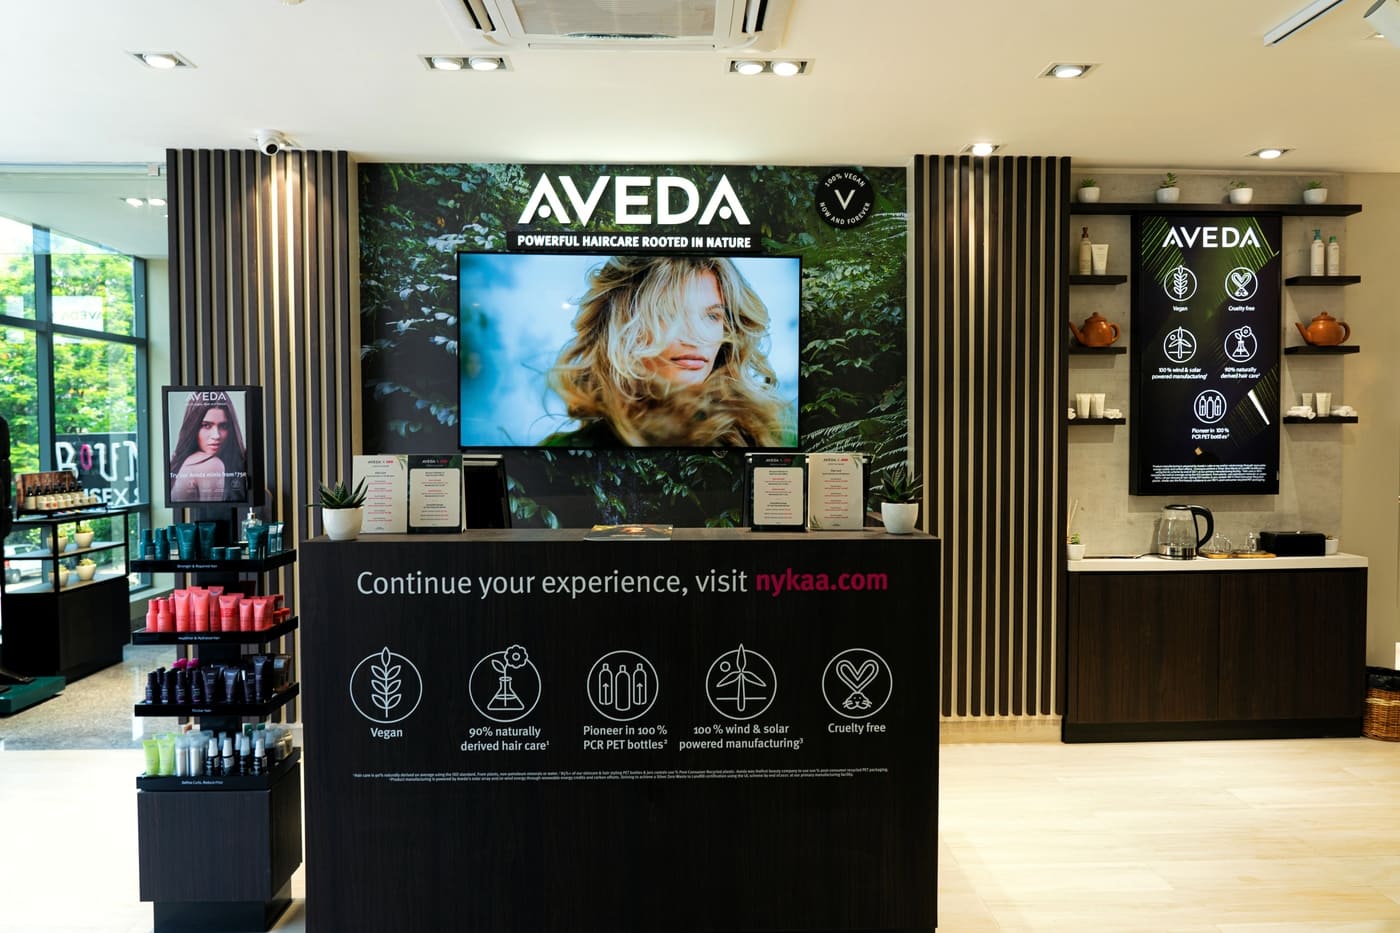 Nykaa partners with Aveda to launch first Aveda X Nykaa Salon in Bengaluru